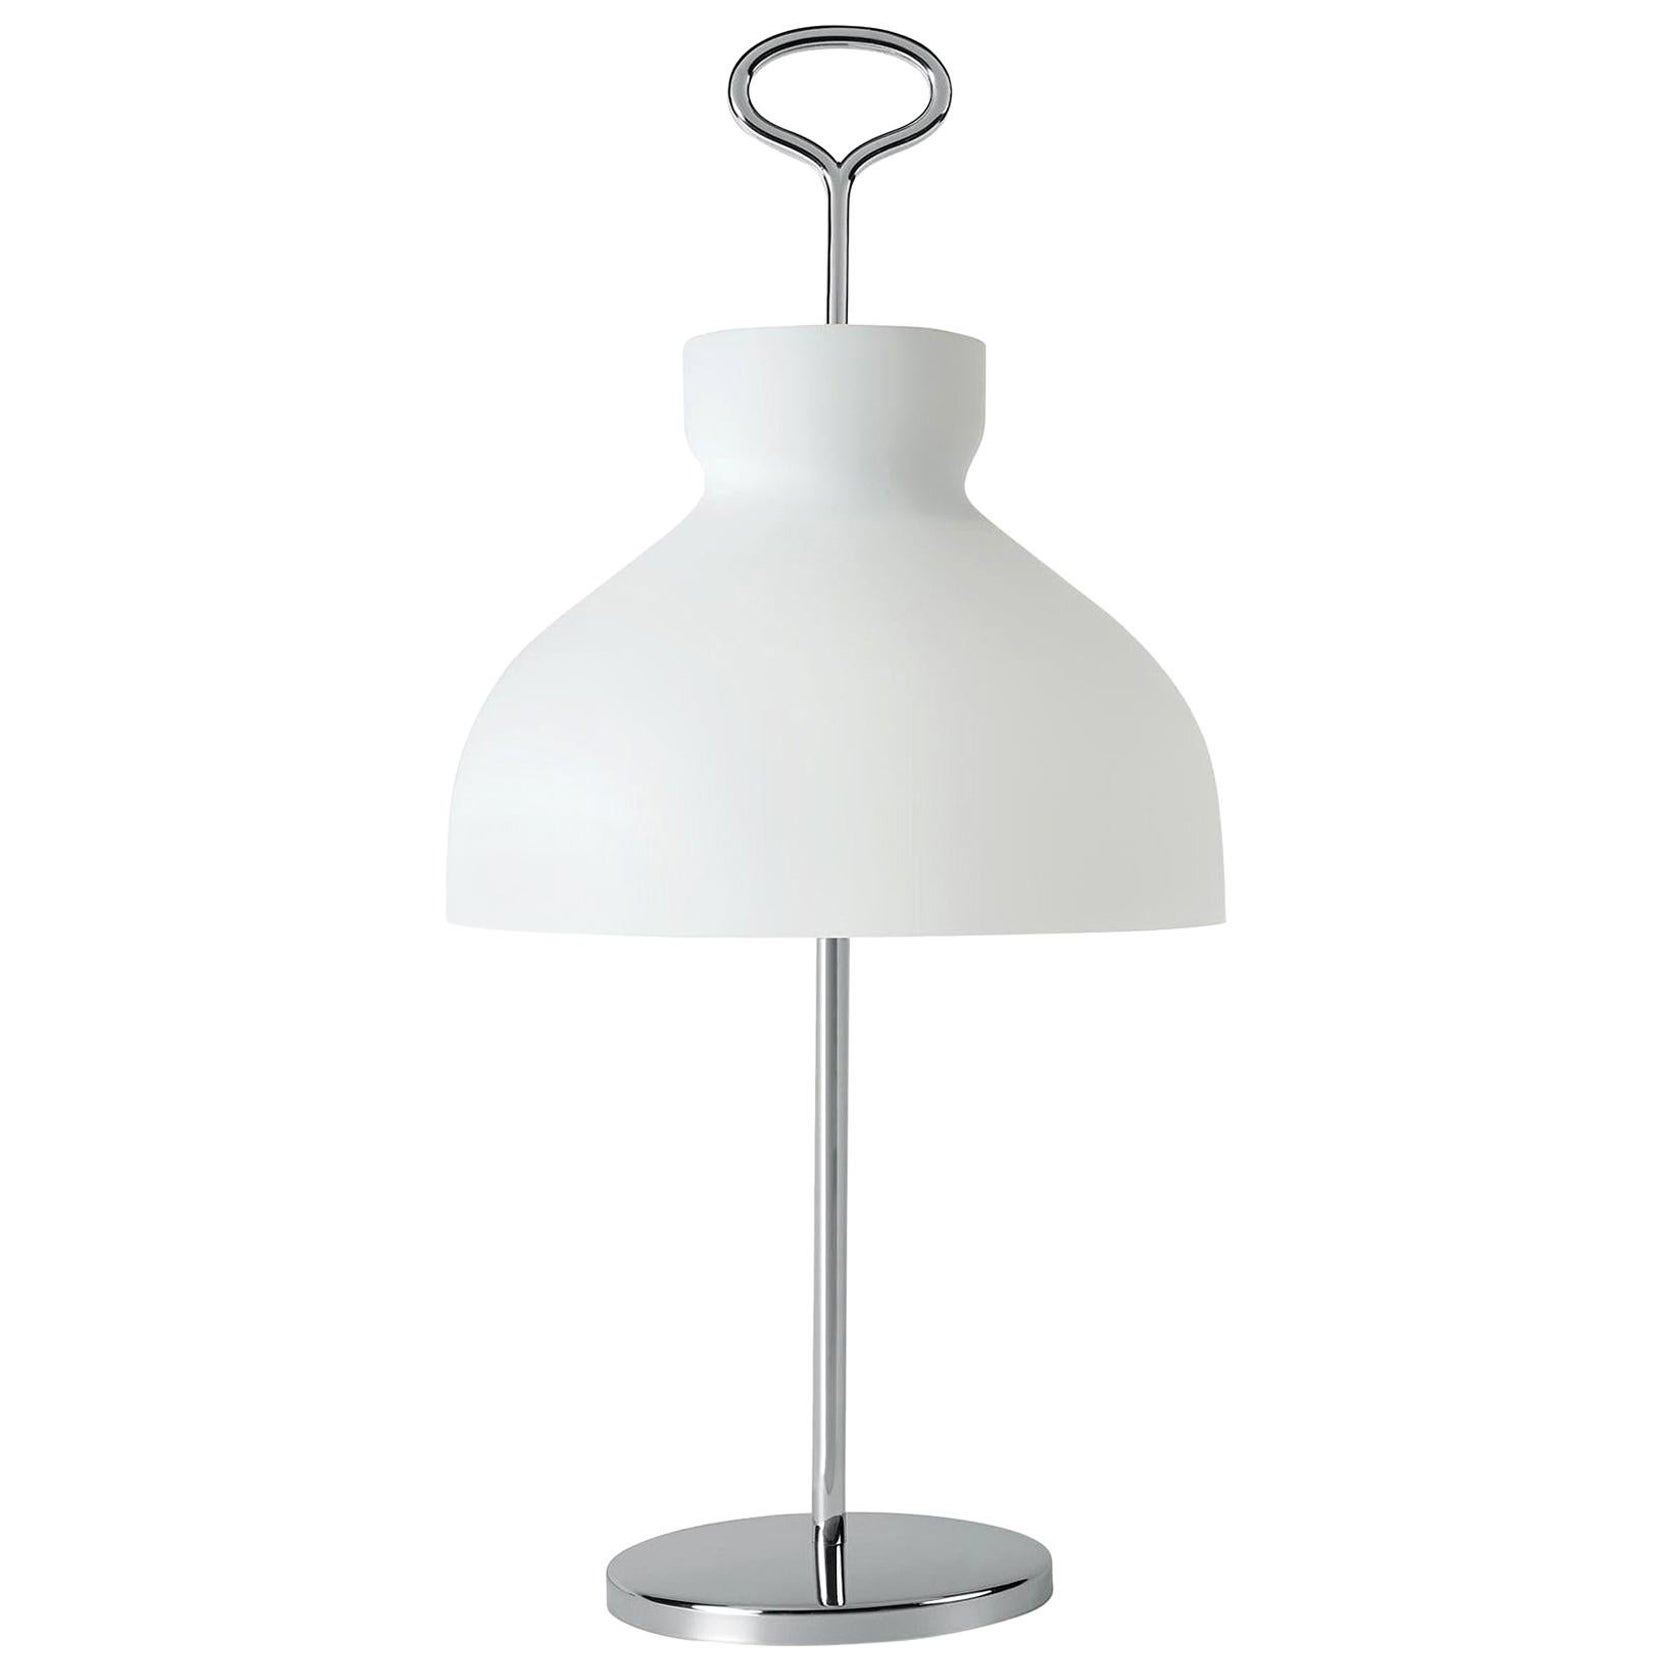 Large Ignazio Gardella 'Arenzano' Table Lamp in Satin Nickel and Glass For Sale 2